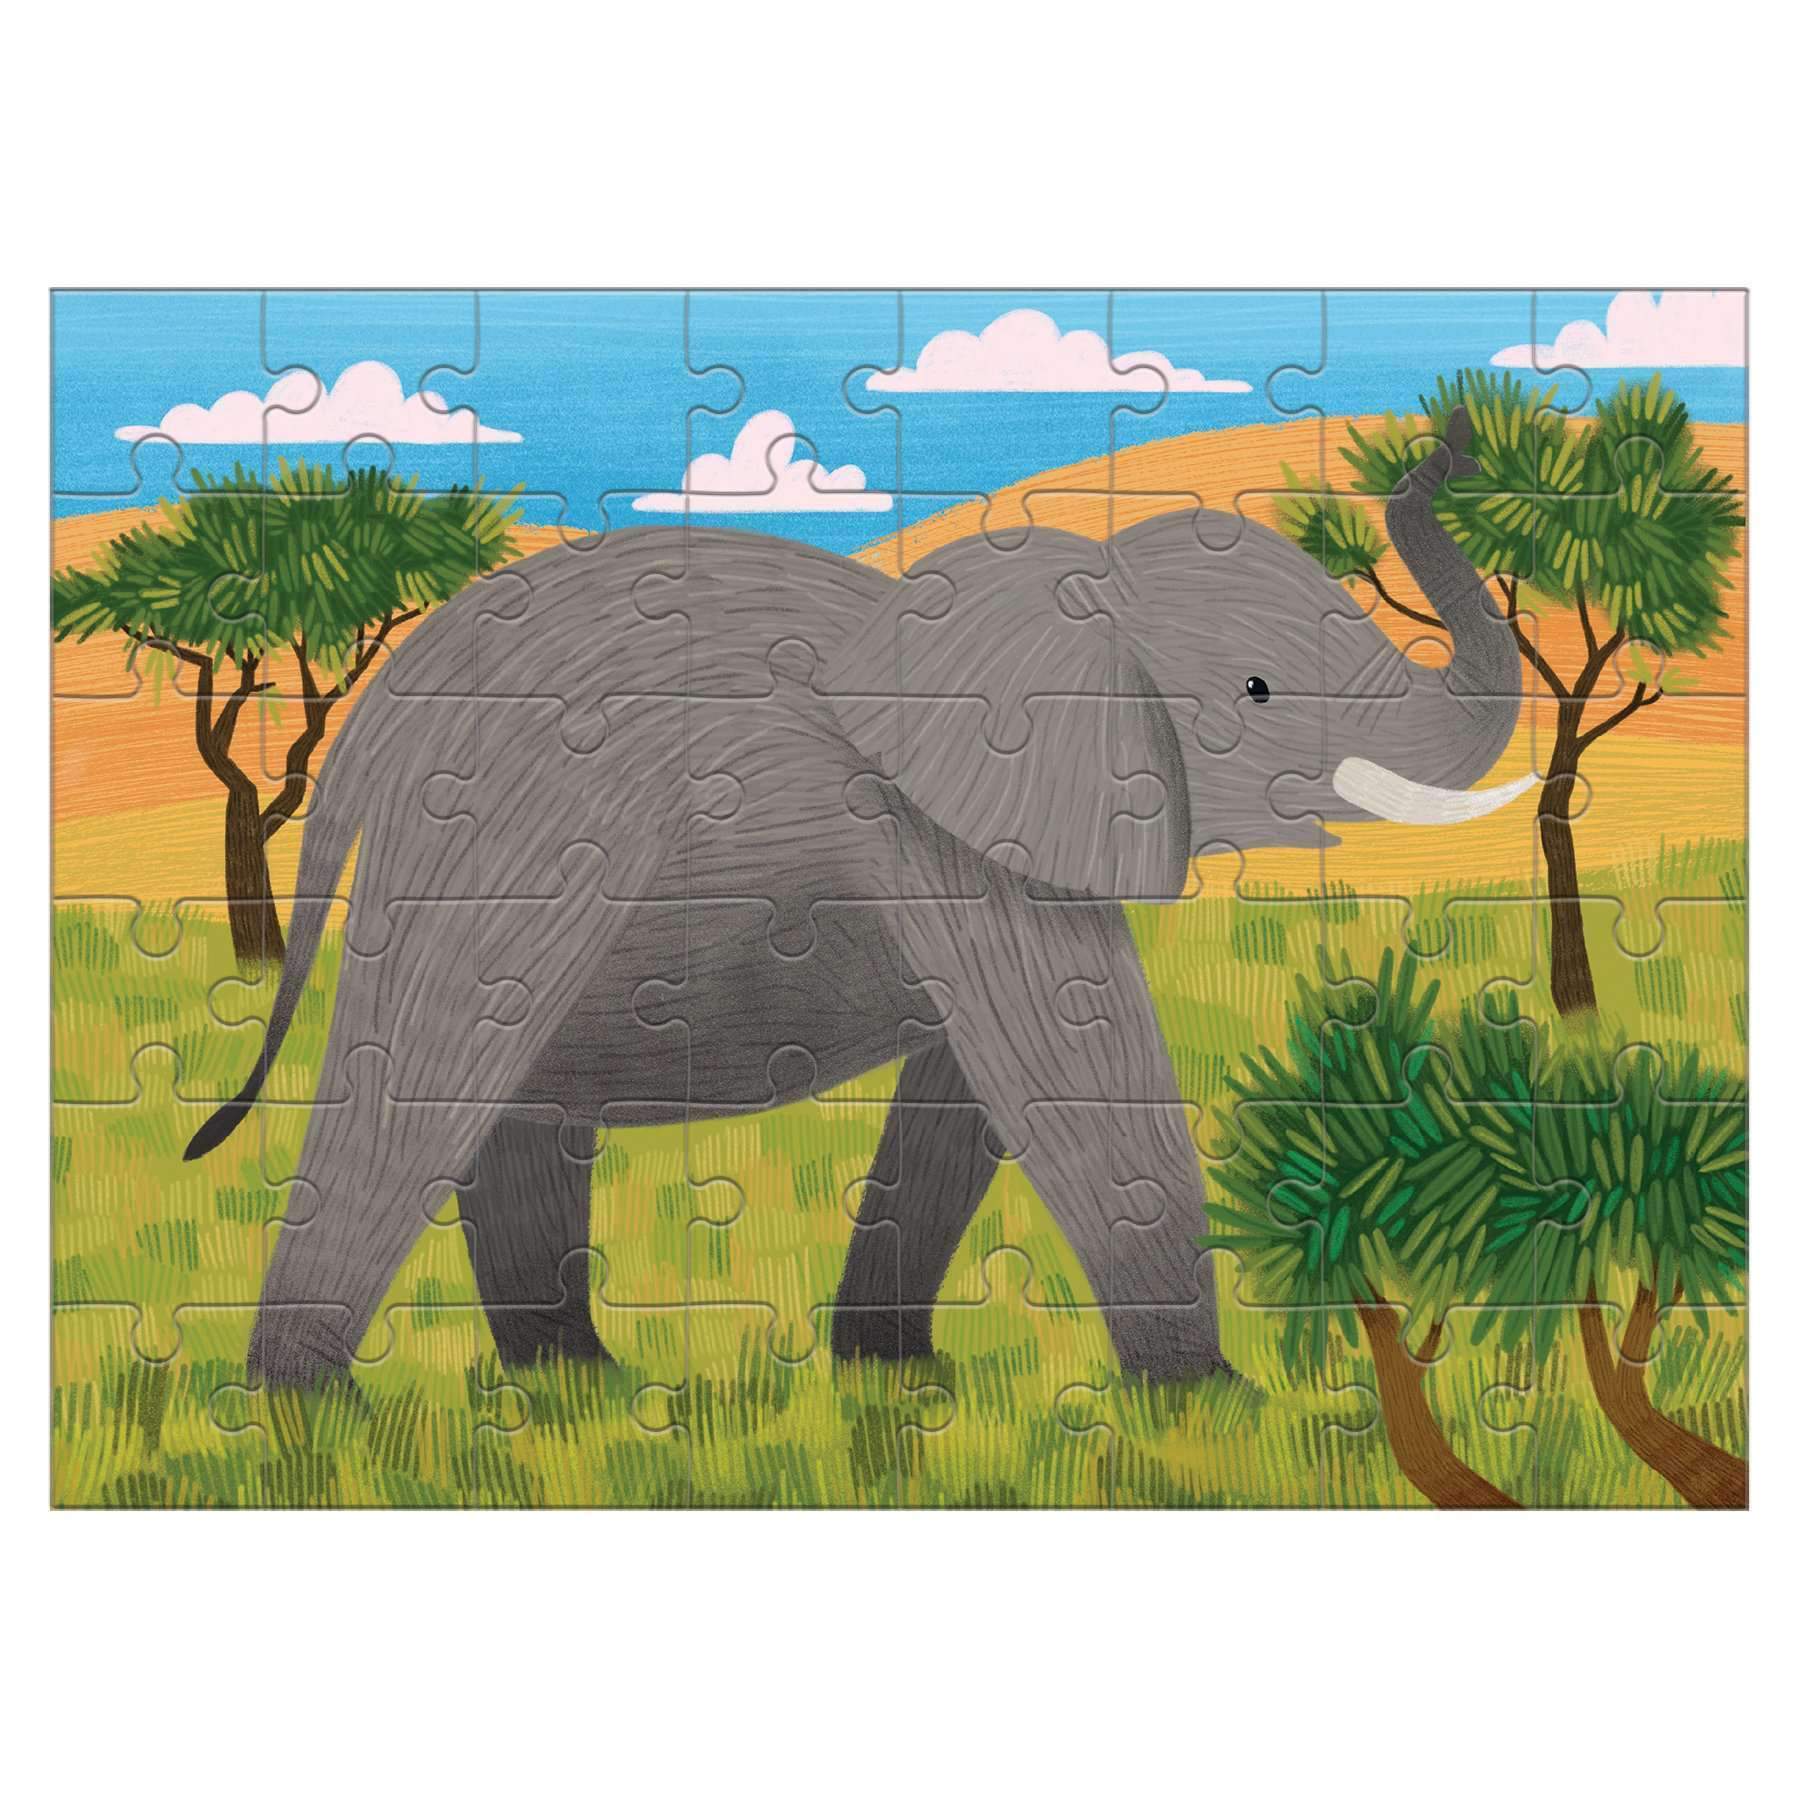 Mini Puzzle - African Elephant | Mudpuppy